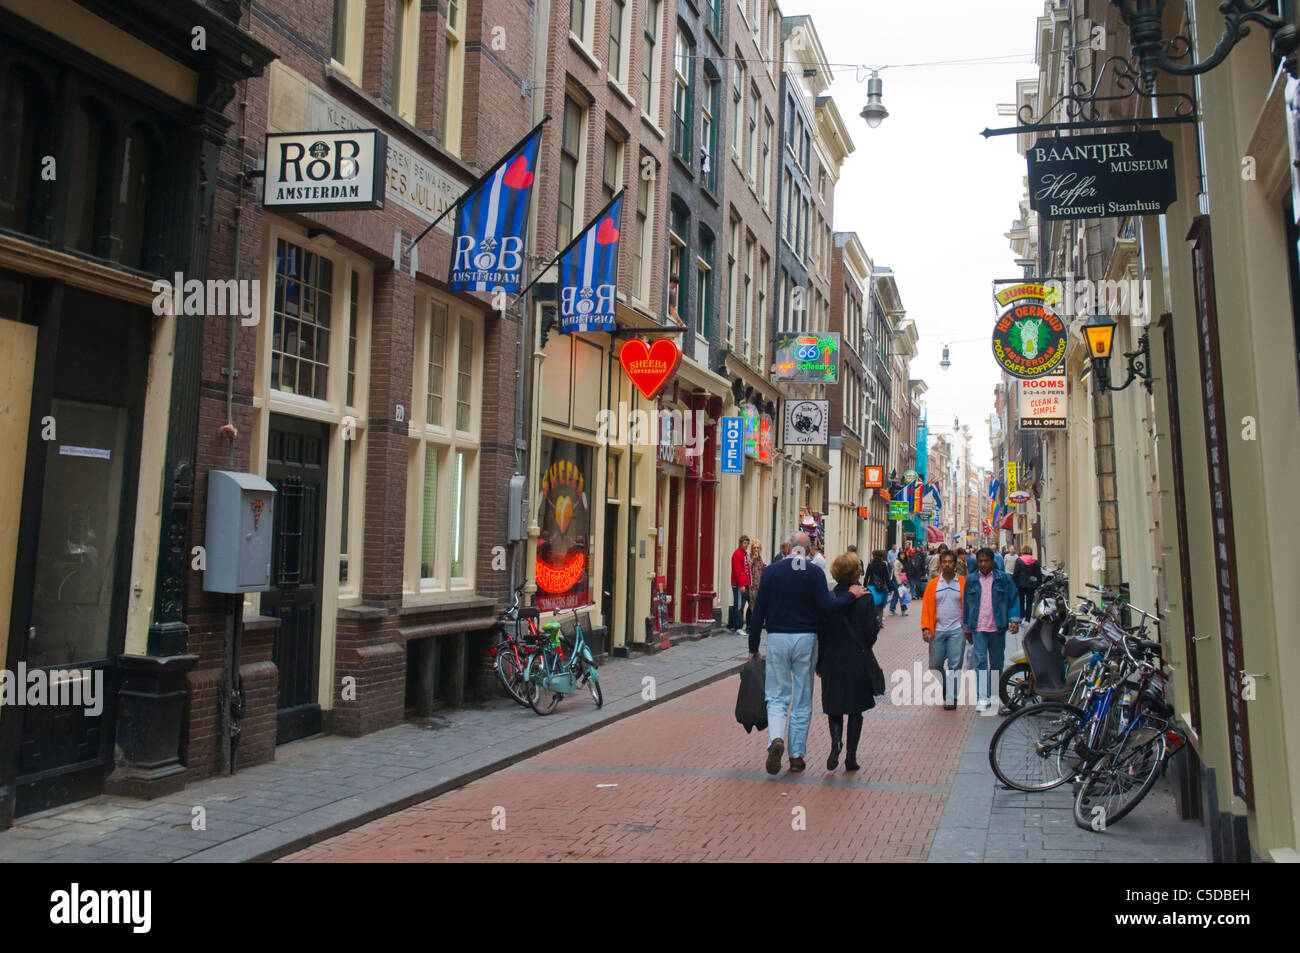 Warmoerstraat nel cuore del quartiere a luci rosse di Amsterdam Paesi Bassi Europa Foto Stock